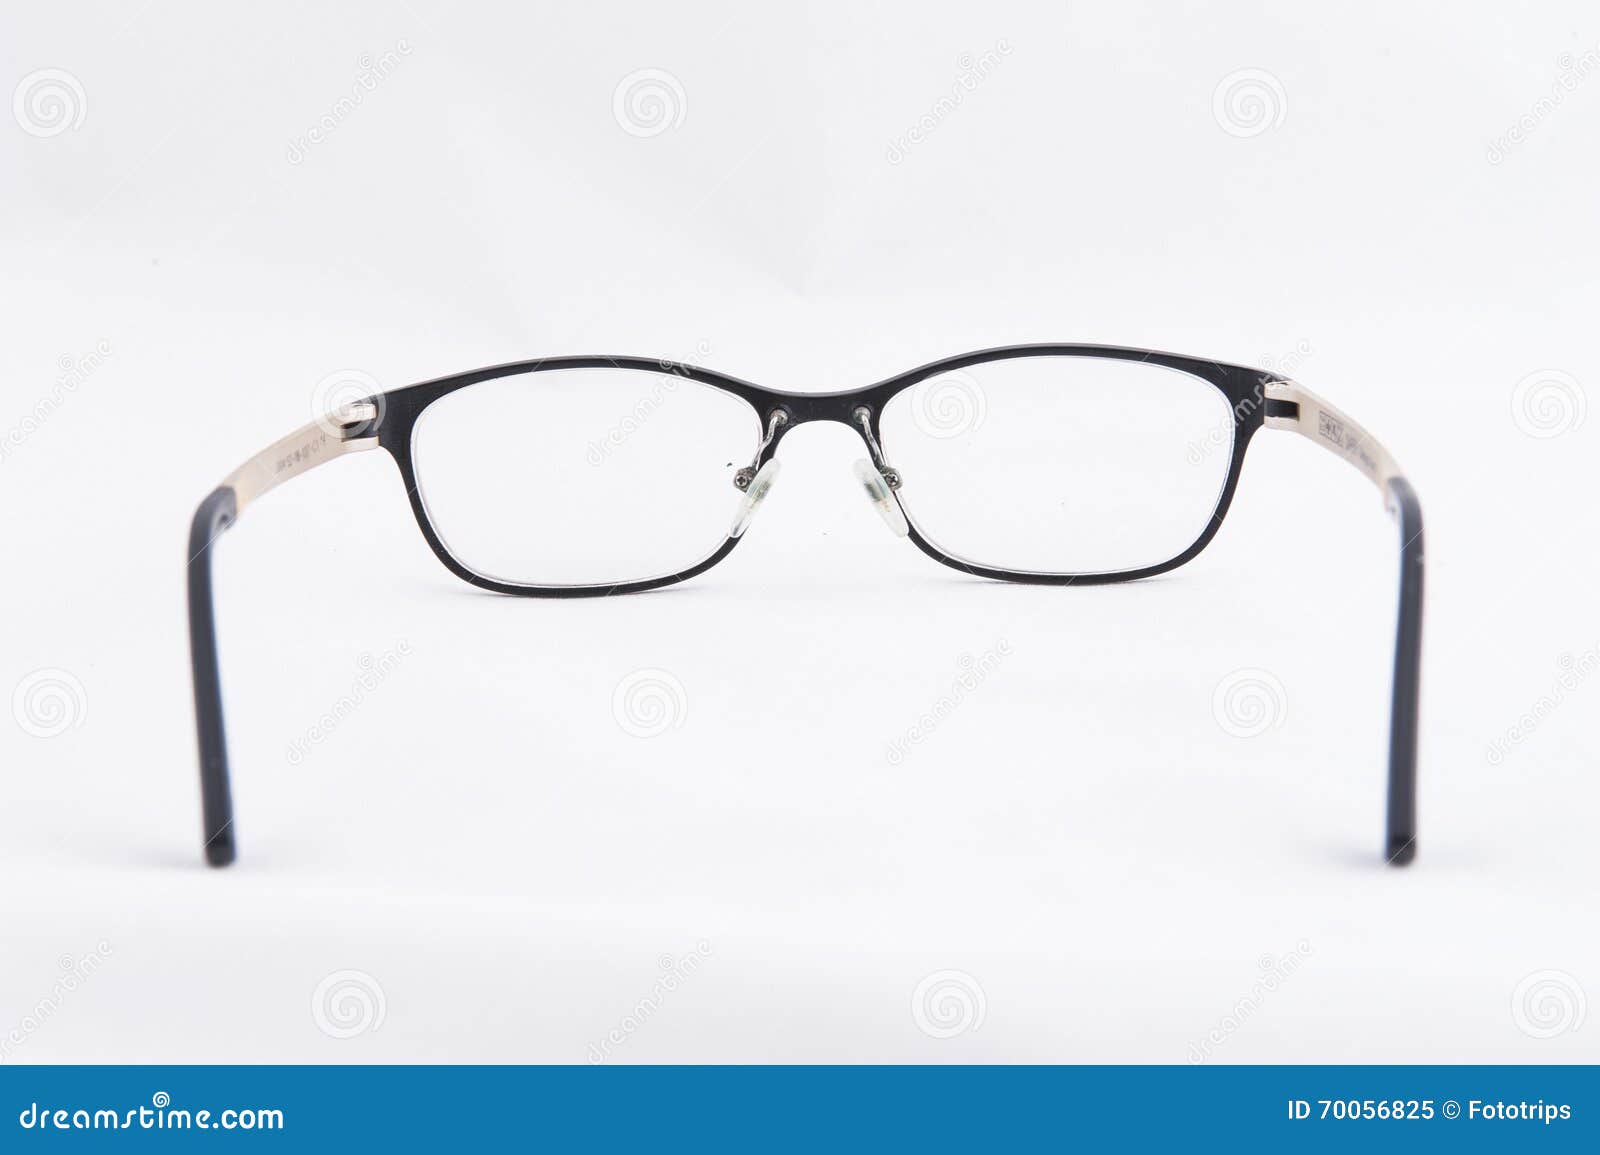 Glasses on White Background Stock Image - Image of accessory, frame ...